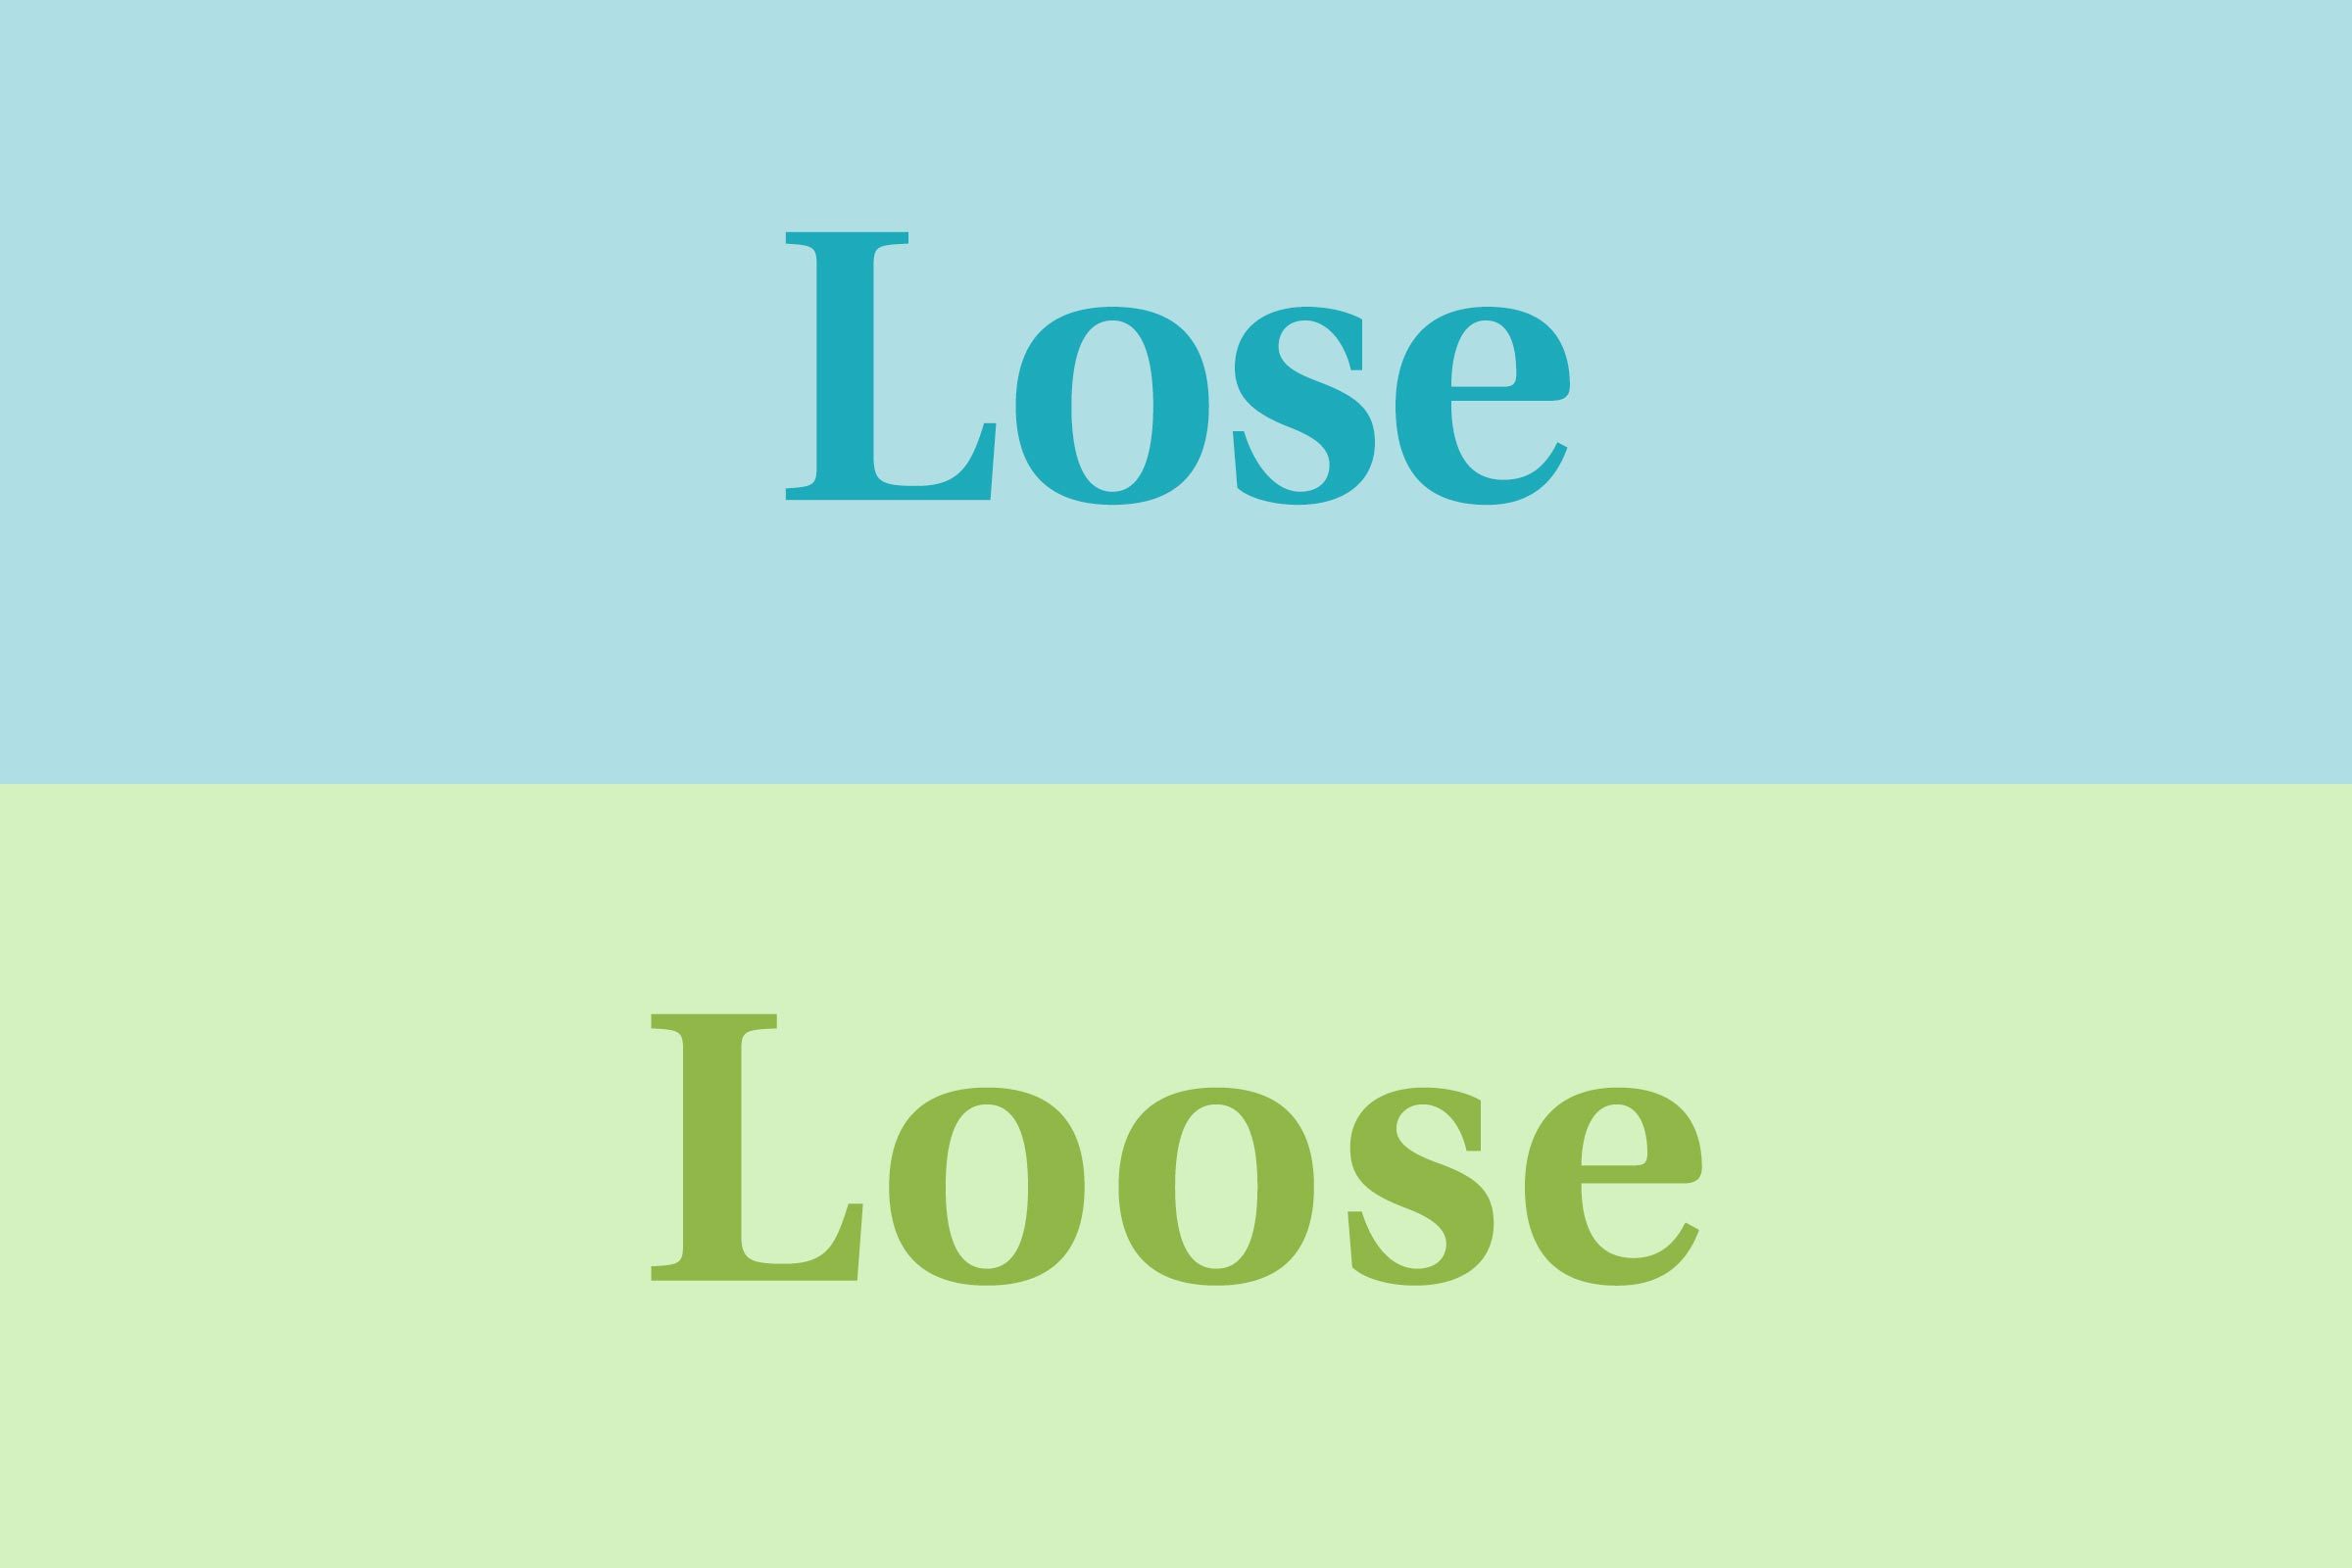 Lose vs. loose